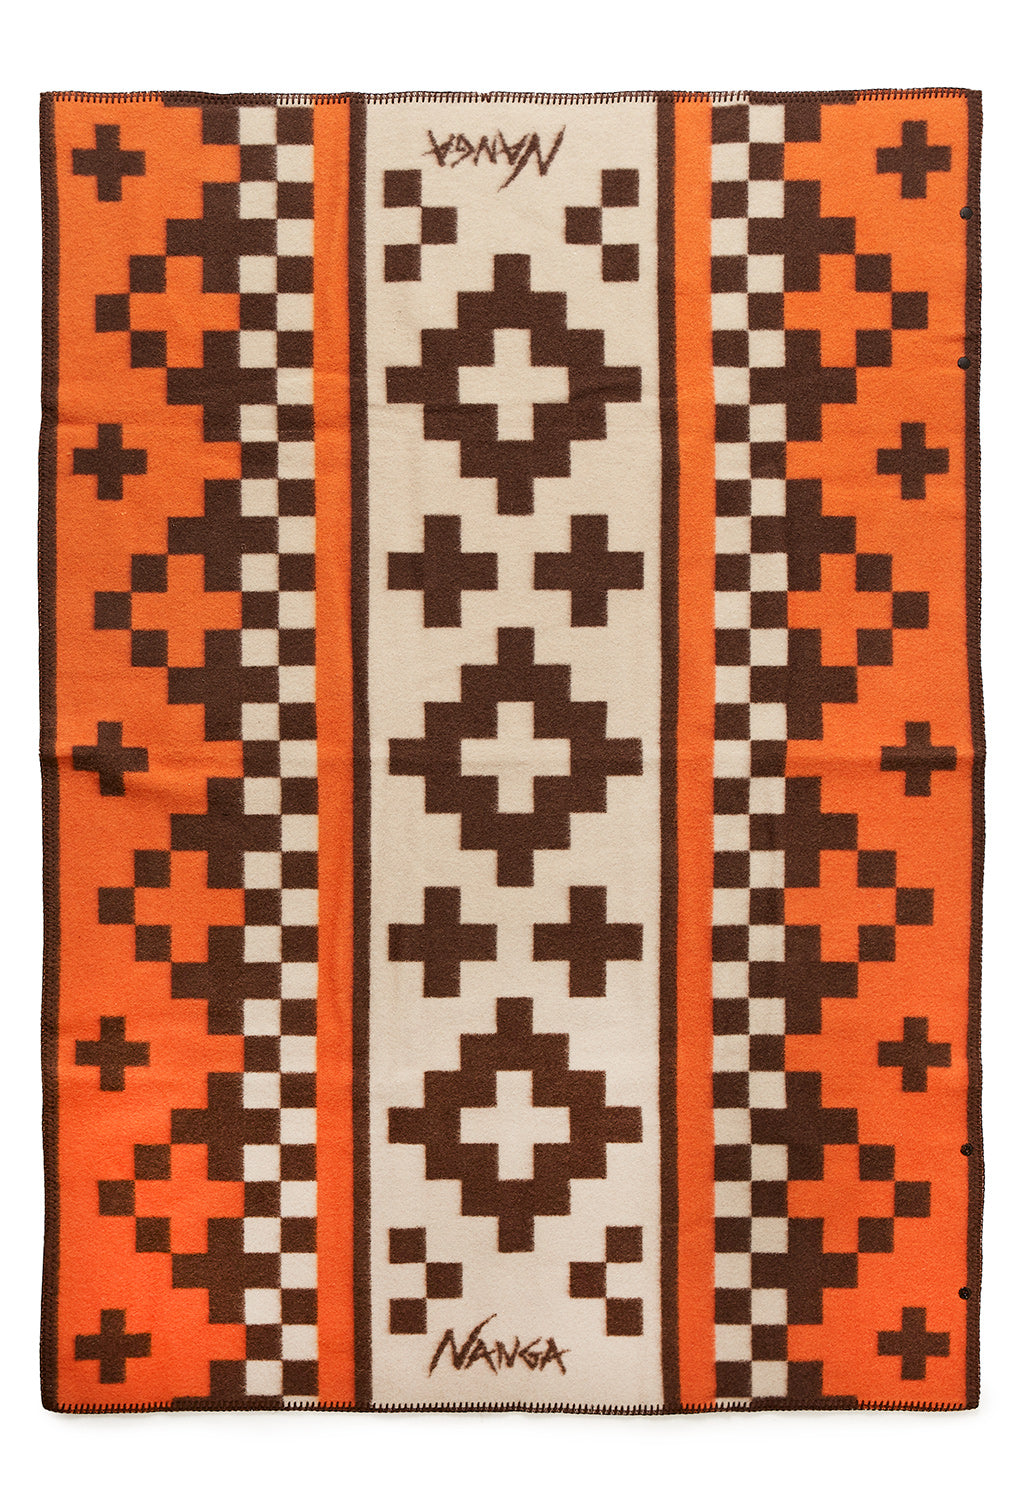 Nanga Checker and Cross Folk Blanket - Orange